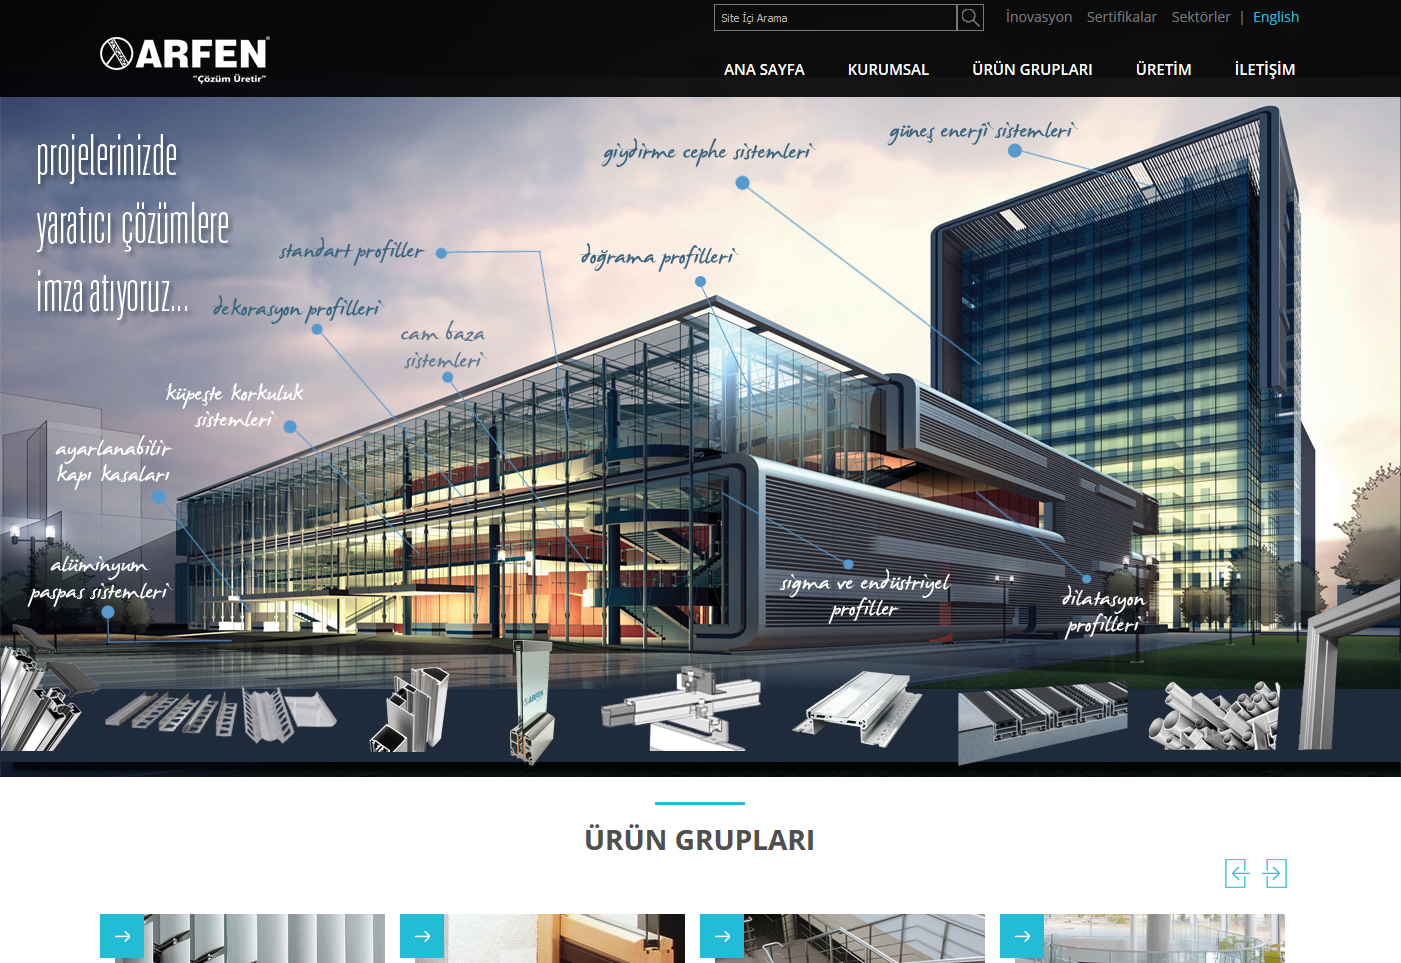 Arfen Aluminum Web Site Is Online Its New Face